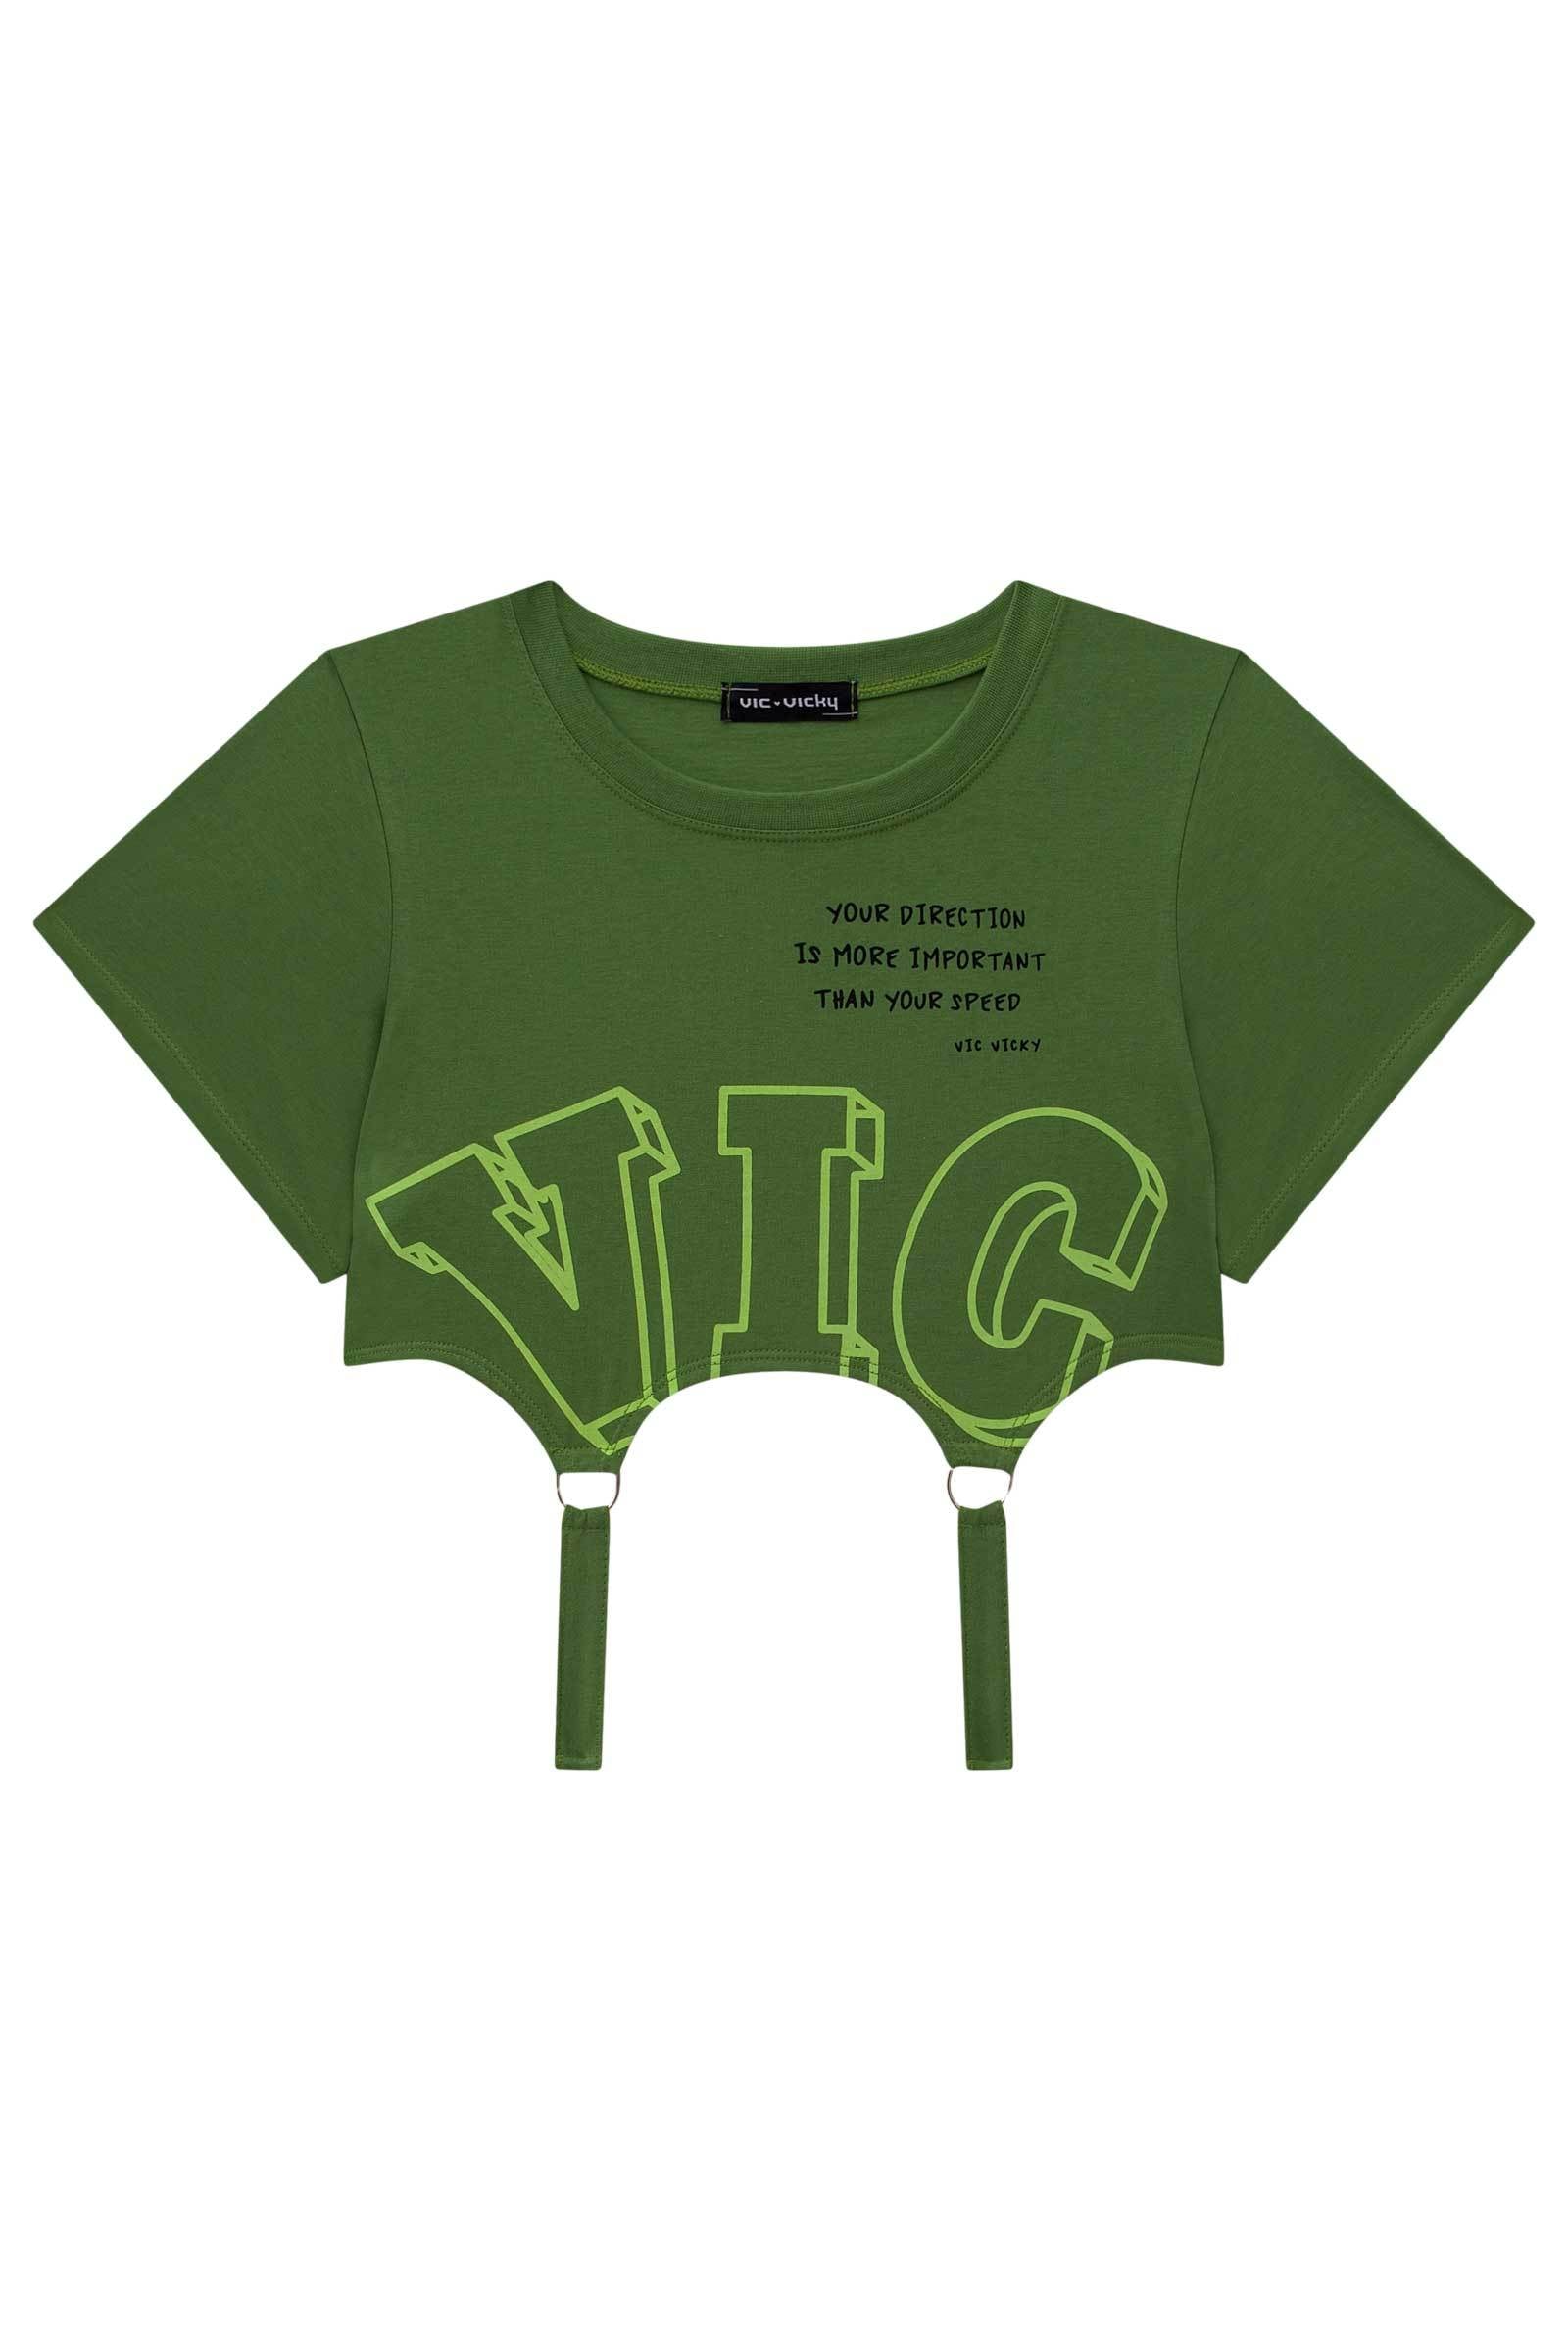 Camiseta Top Cropped Over em Meia Malha 73822 Vic&Vicky